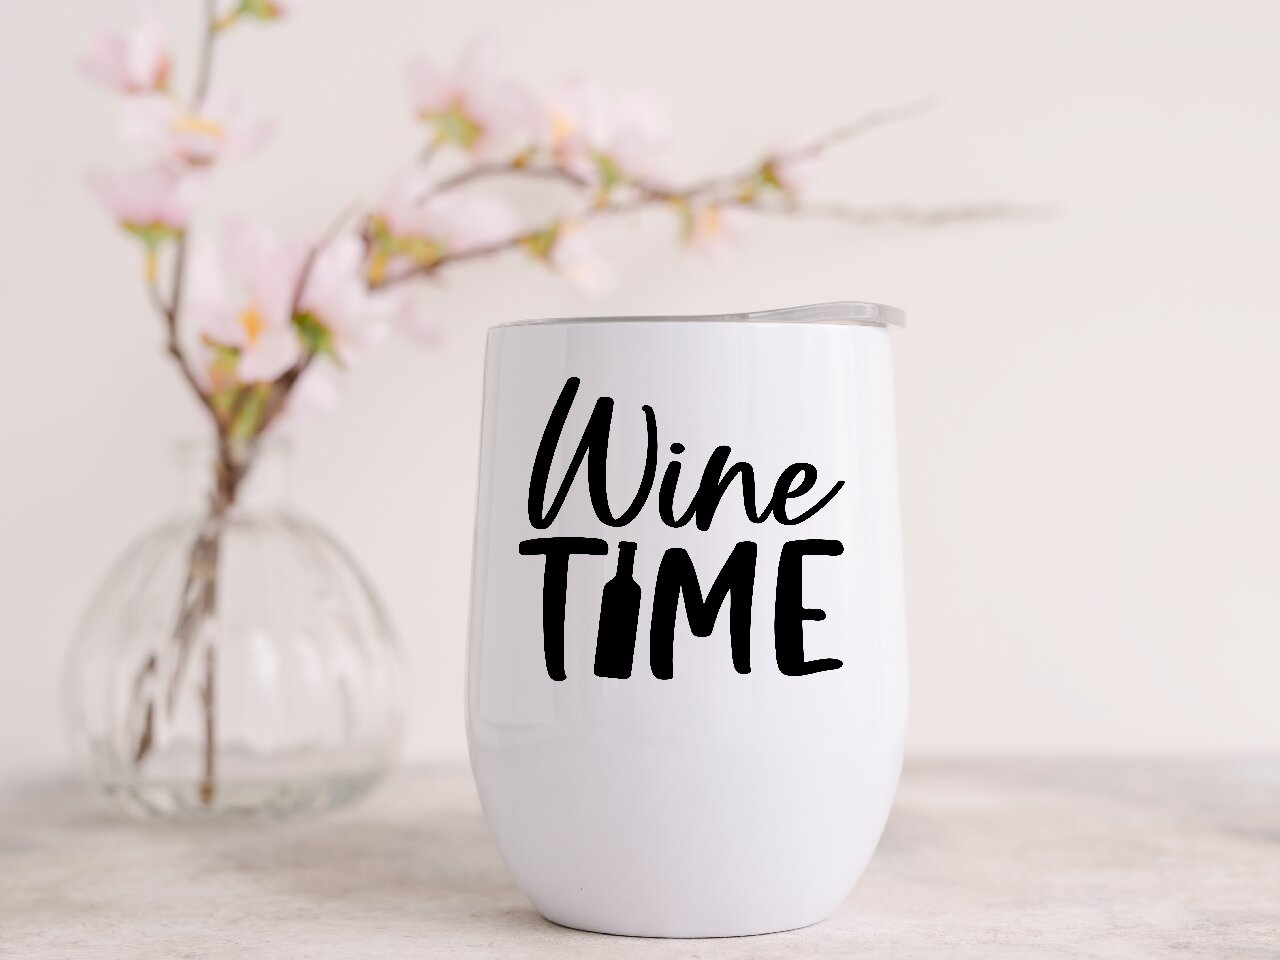 Wine Time 1 - Wine Tumbler